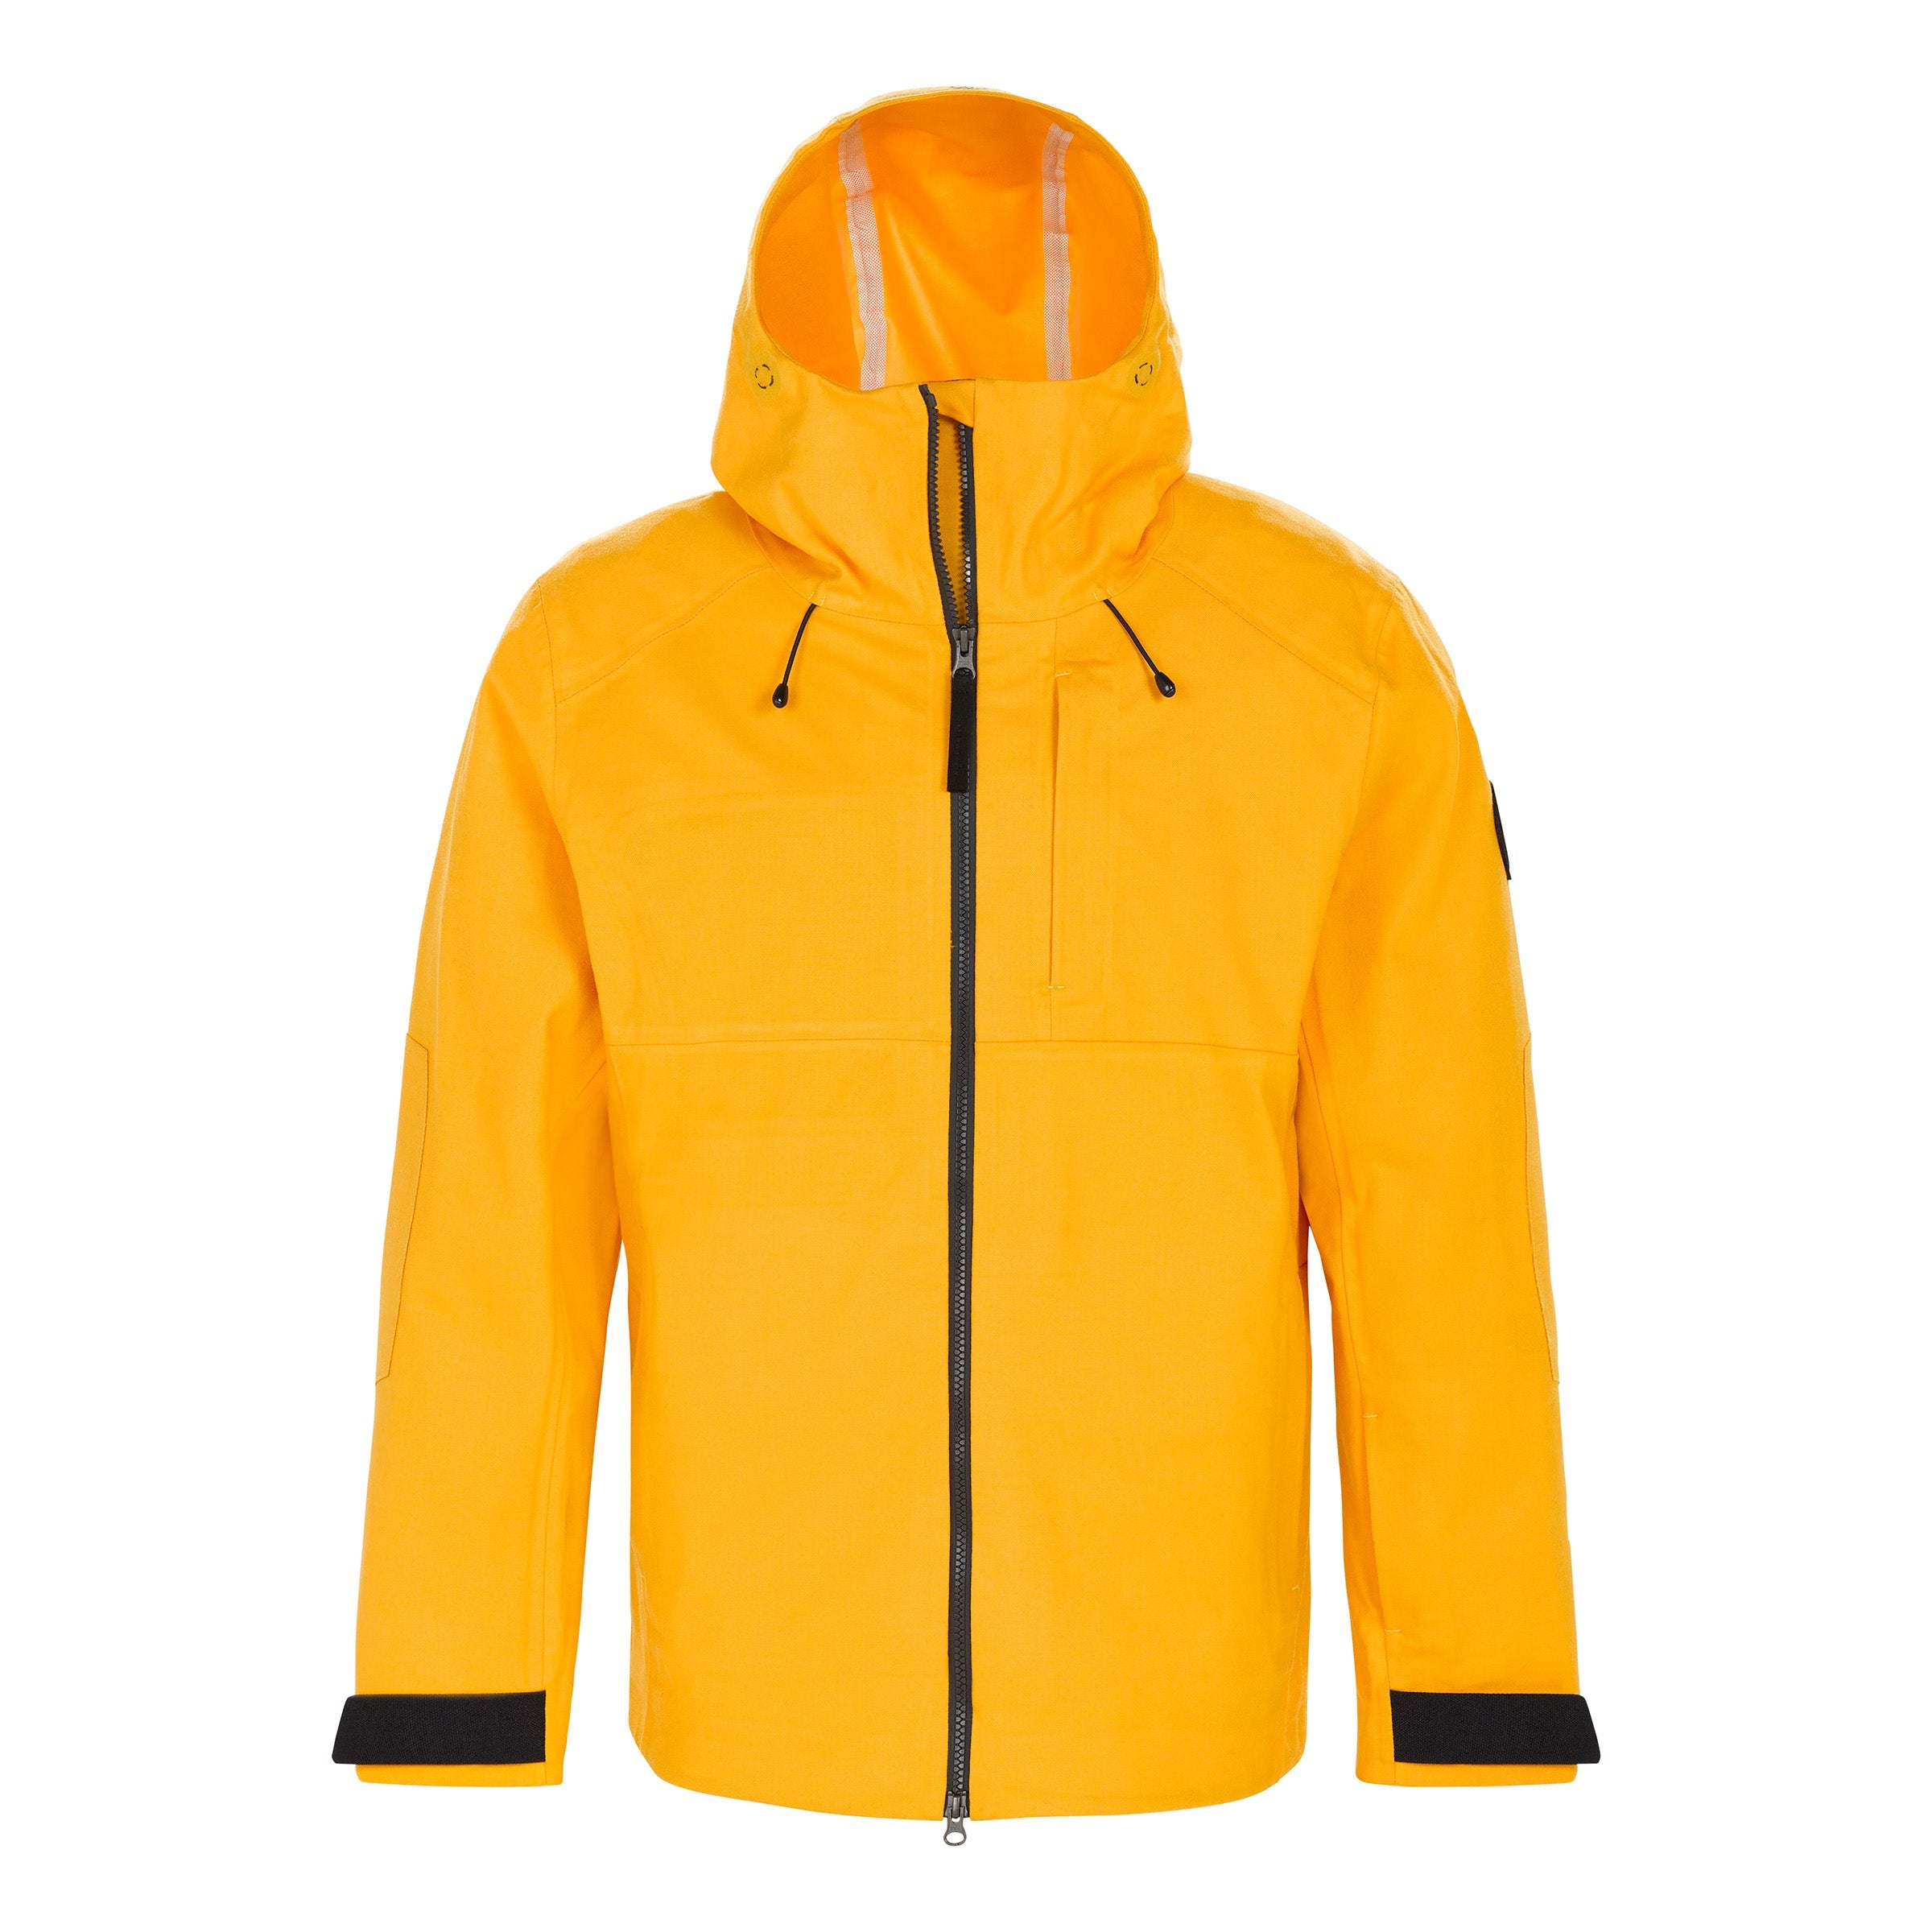 Majestic Athletic Men's Outdoors Jacket - Yellow - XXL